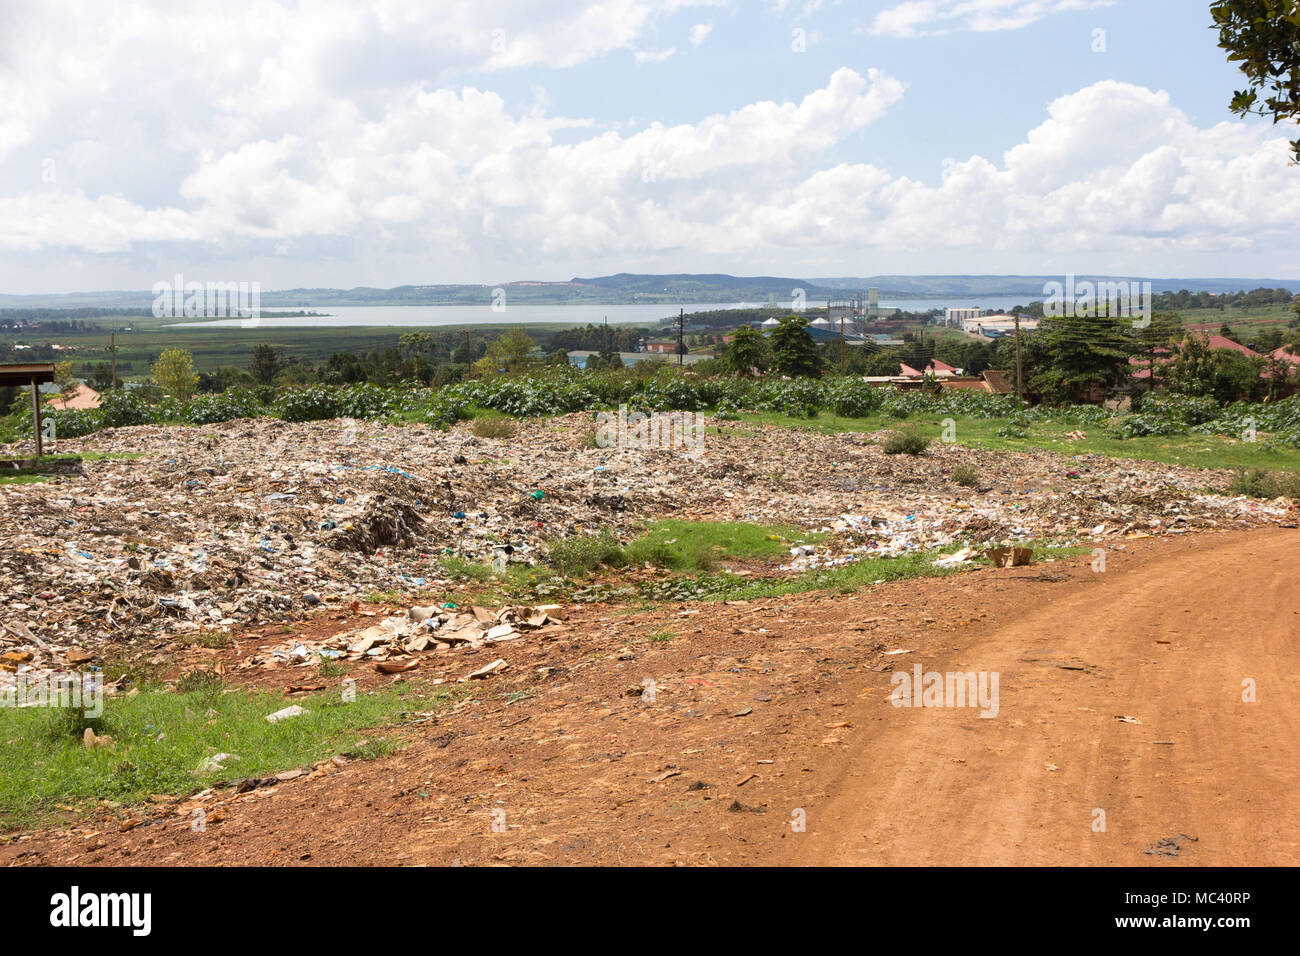 Jinja, Uganda. 21 May 2017. A large landfill of waste sprawling on the suburbs of the Ugandan city of Jinja. Stock Photo